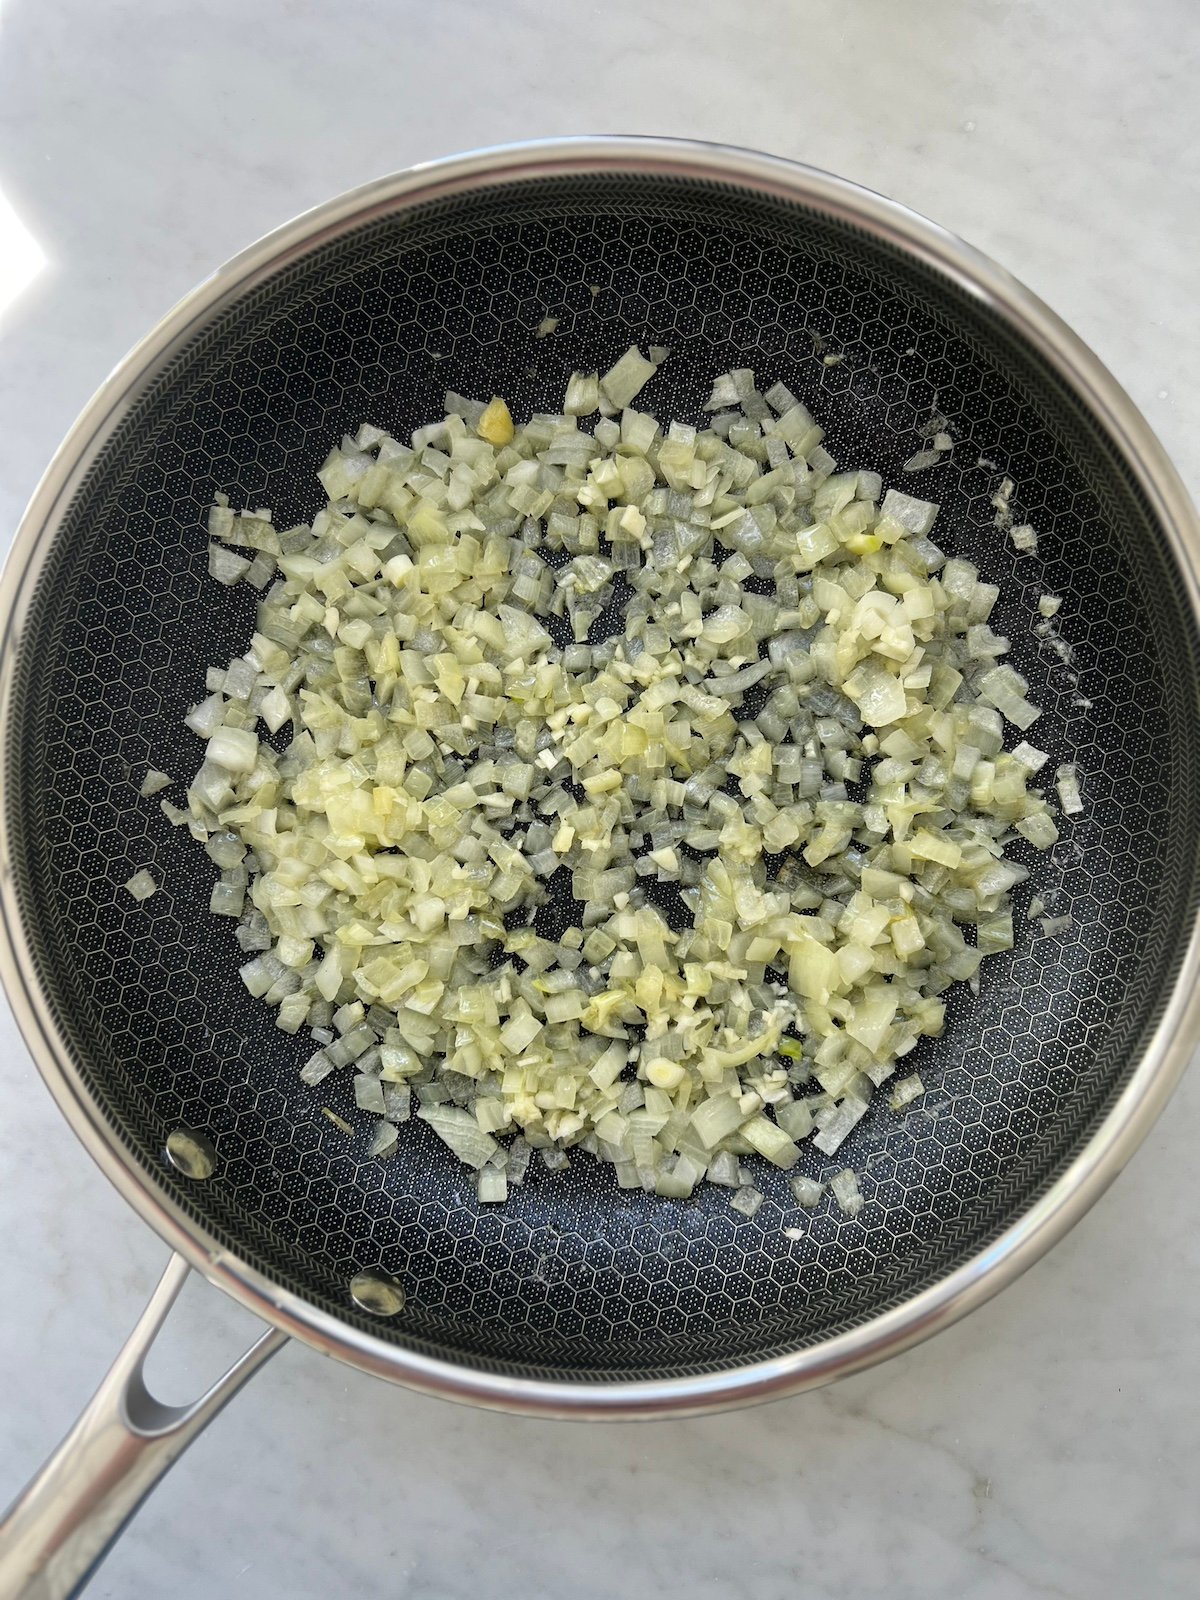 Sautéed onions in a pan